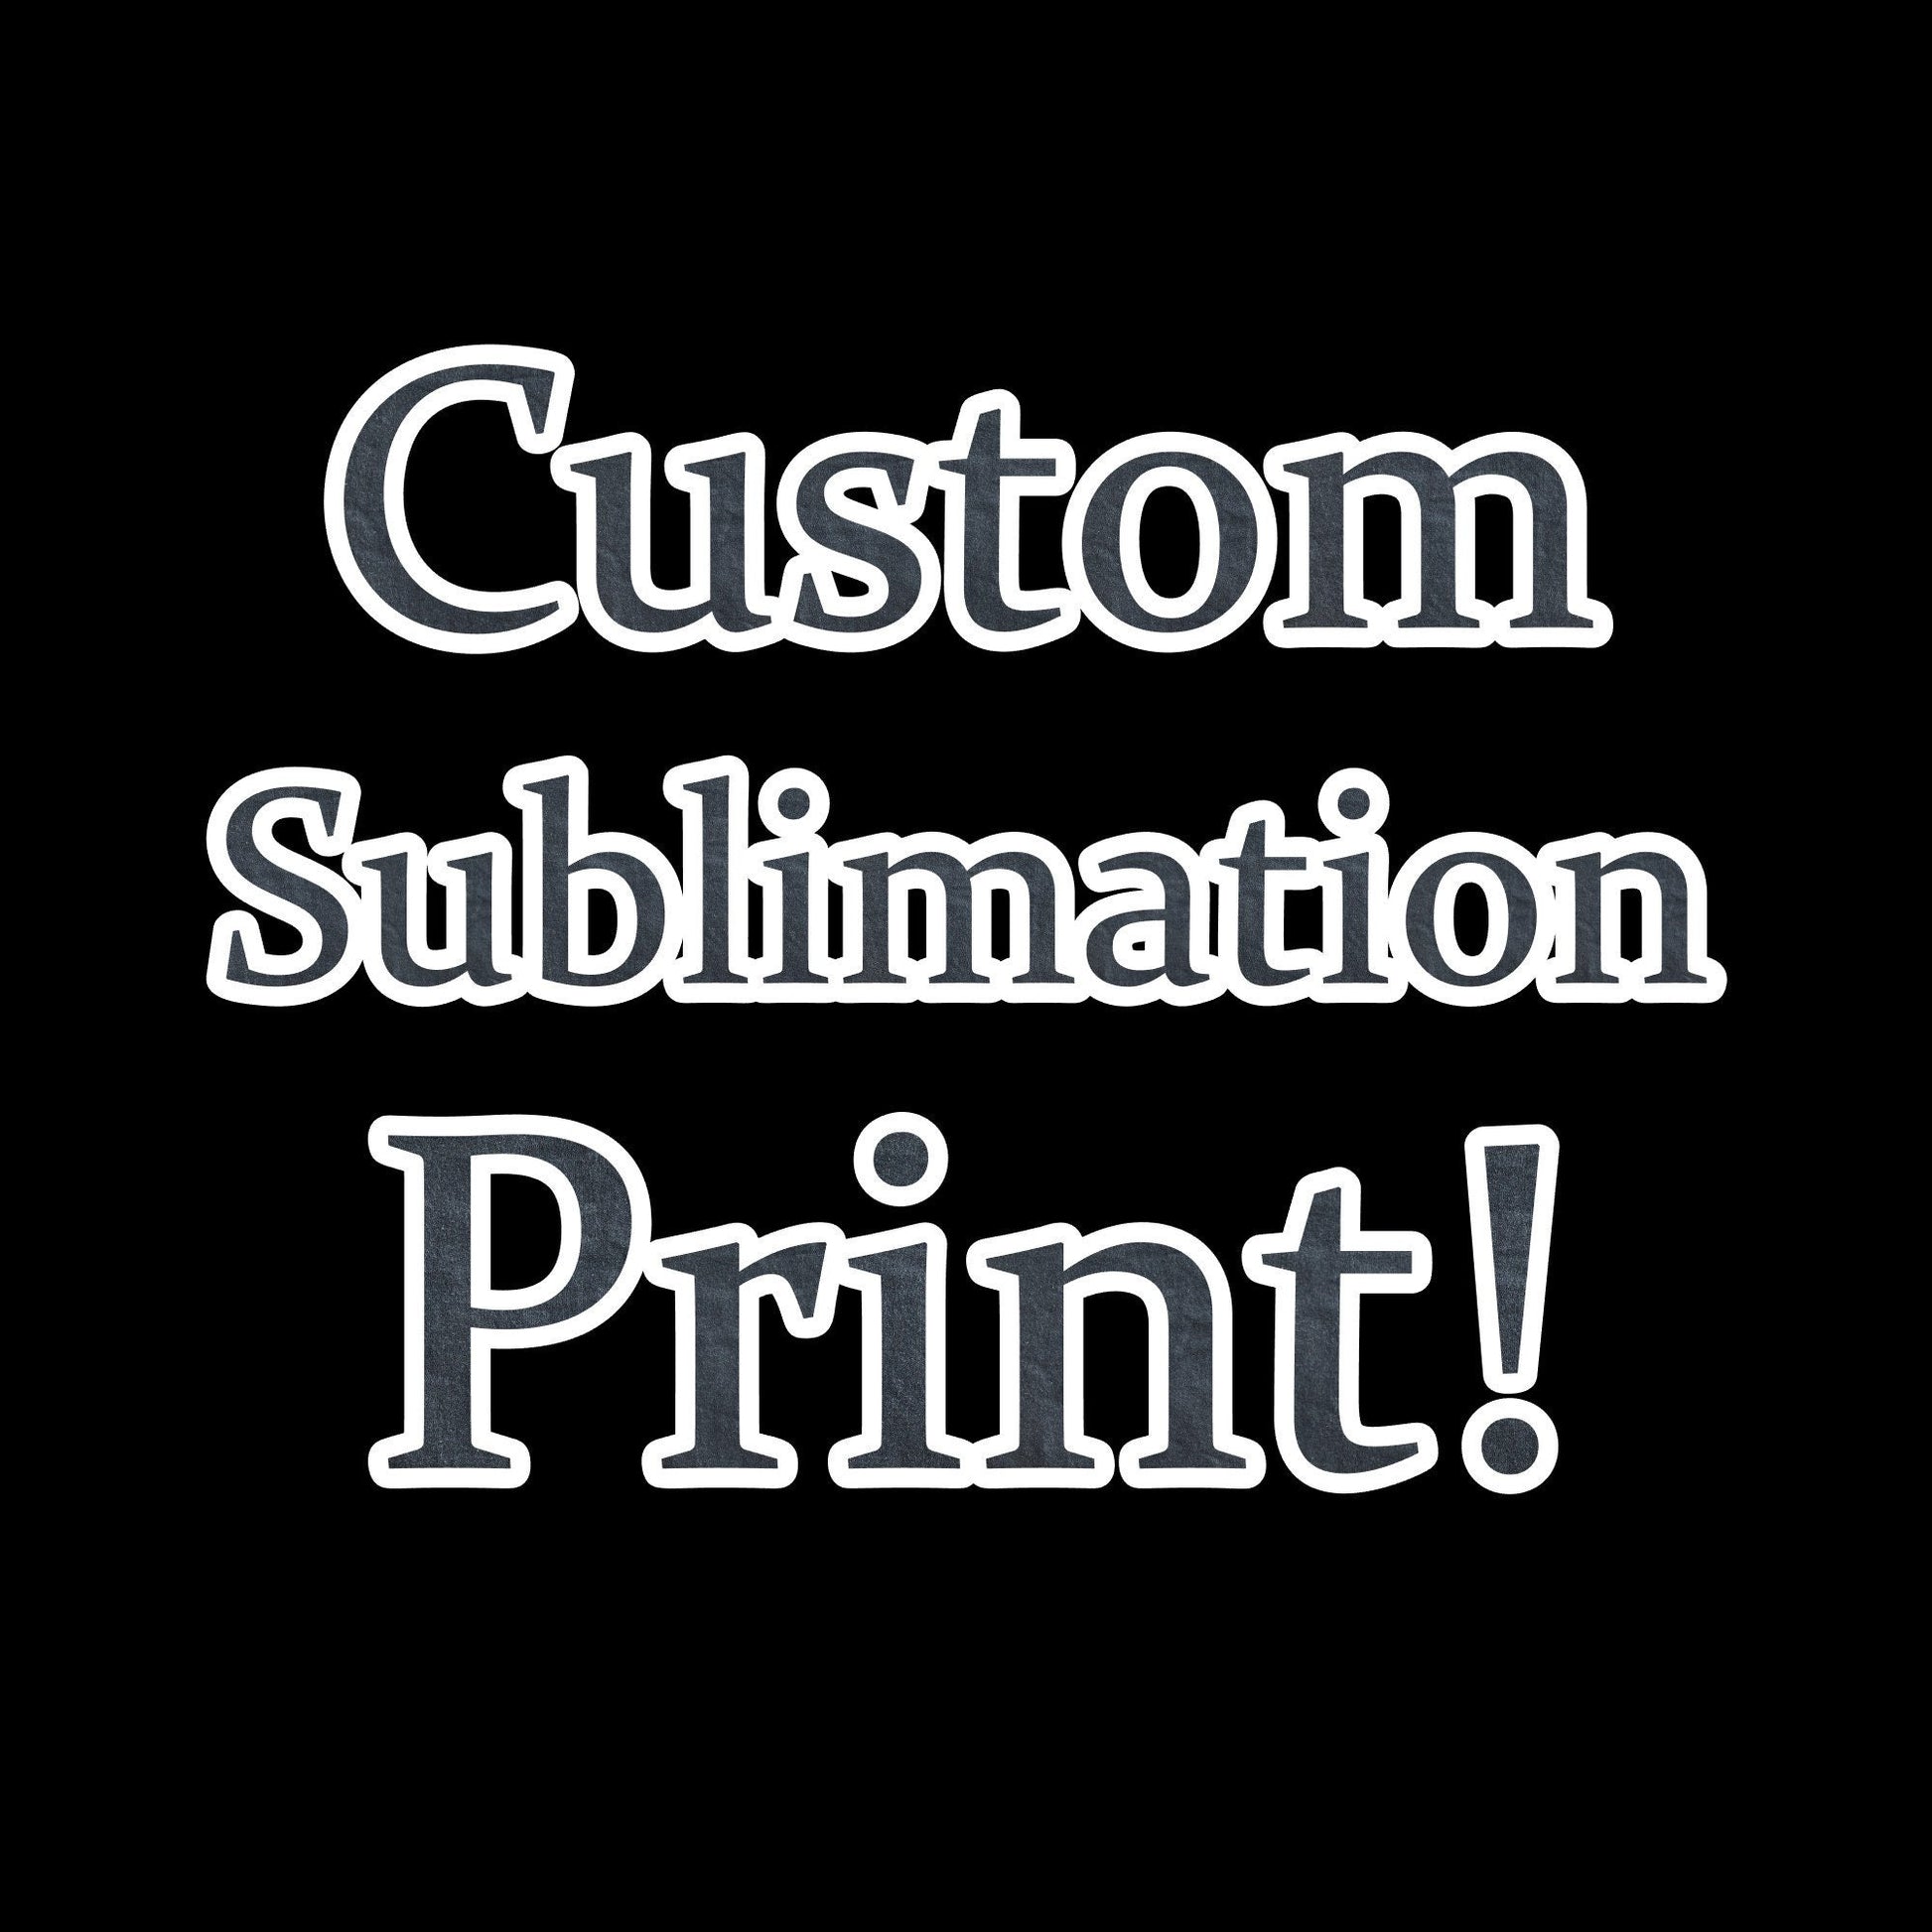 Custom Sublimation Transfers - Ready-to-Press